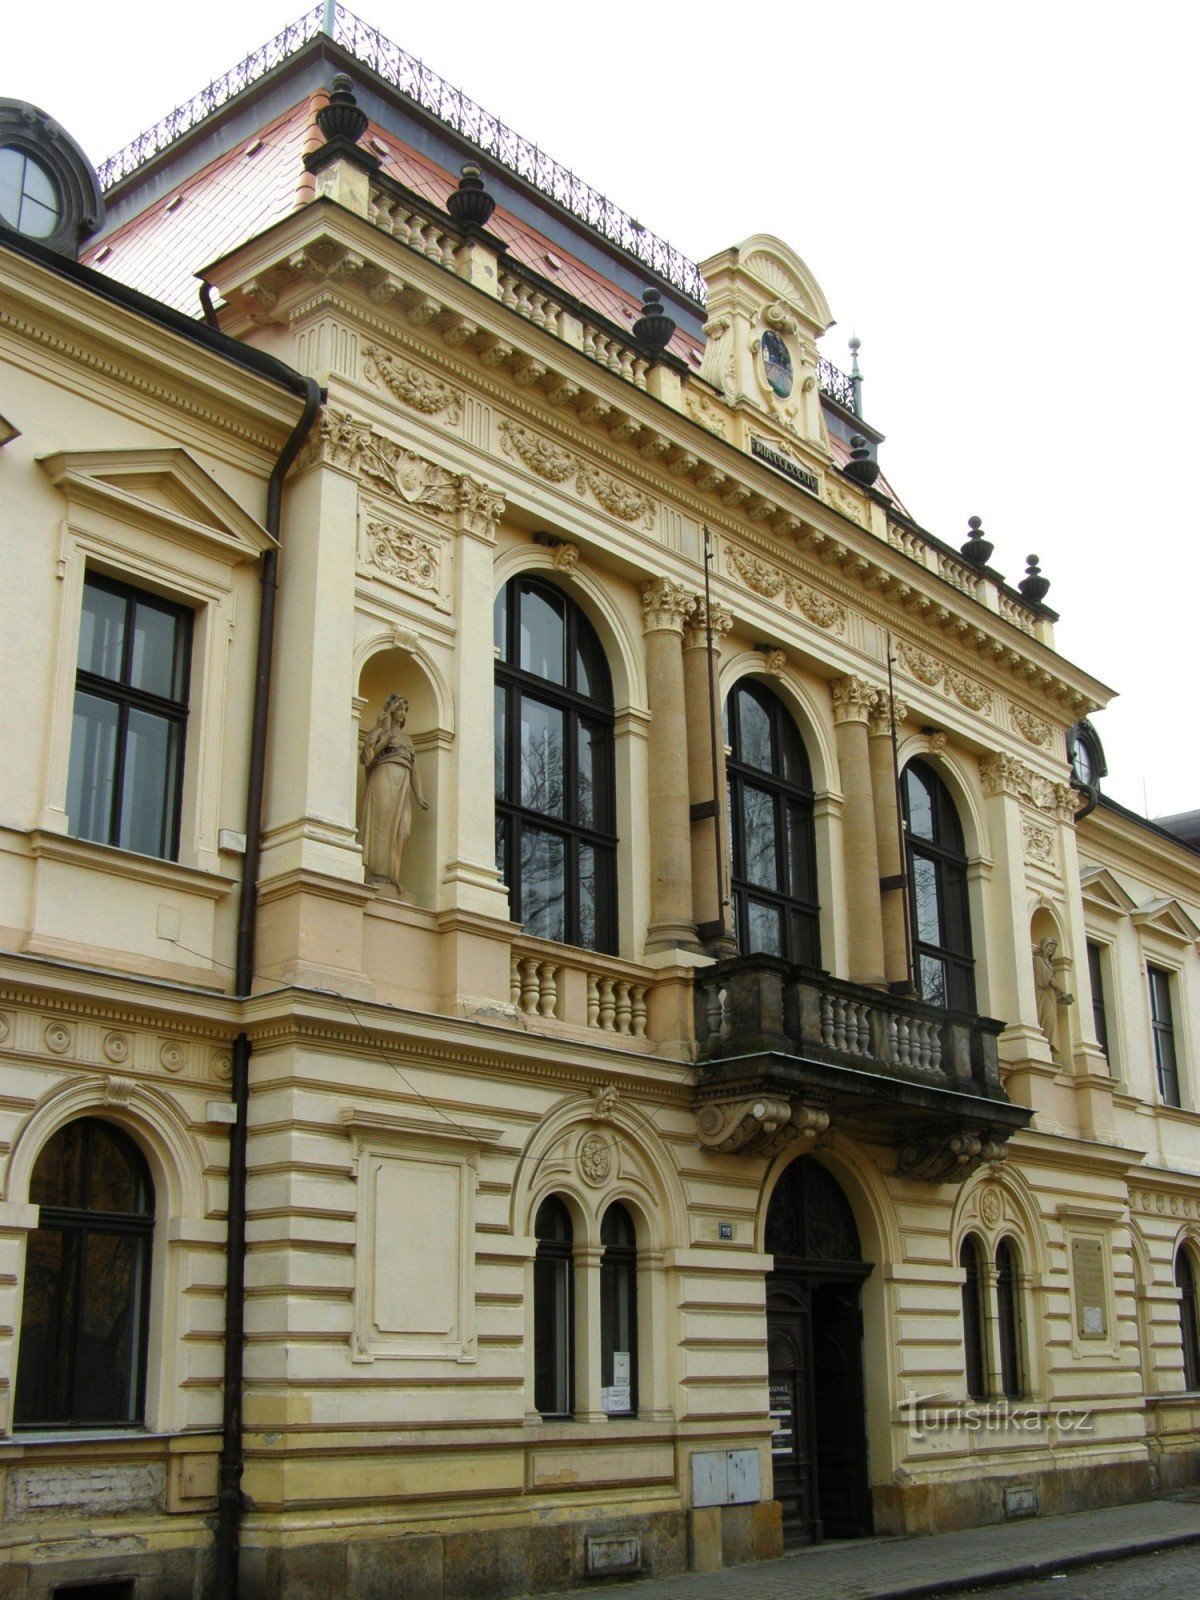 Josefov - Neues Rathaus, Museum